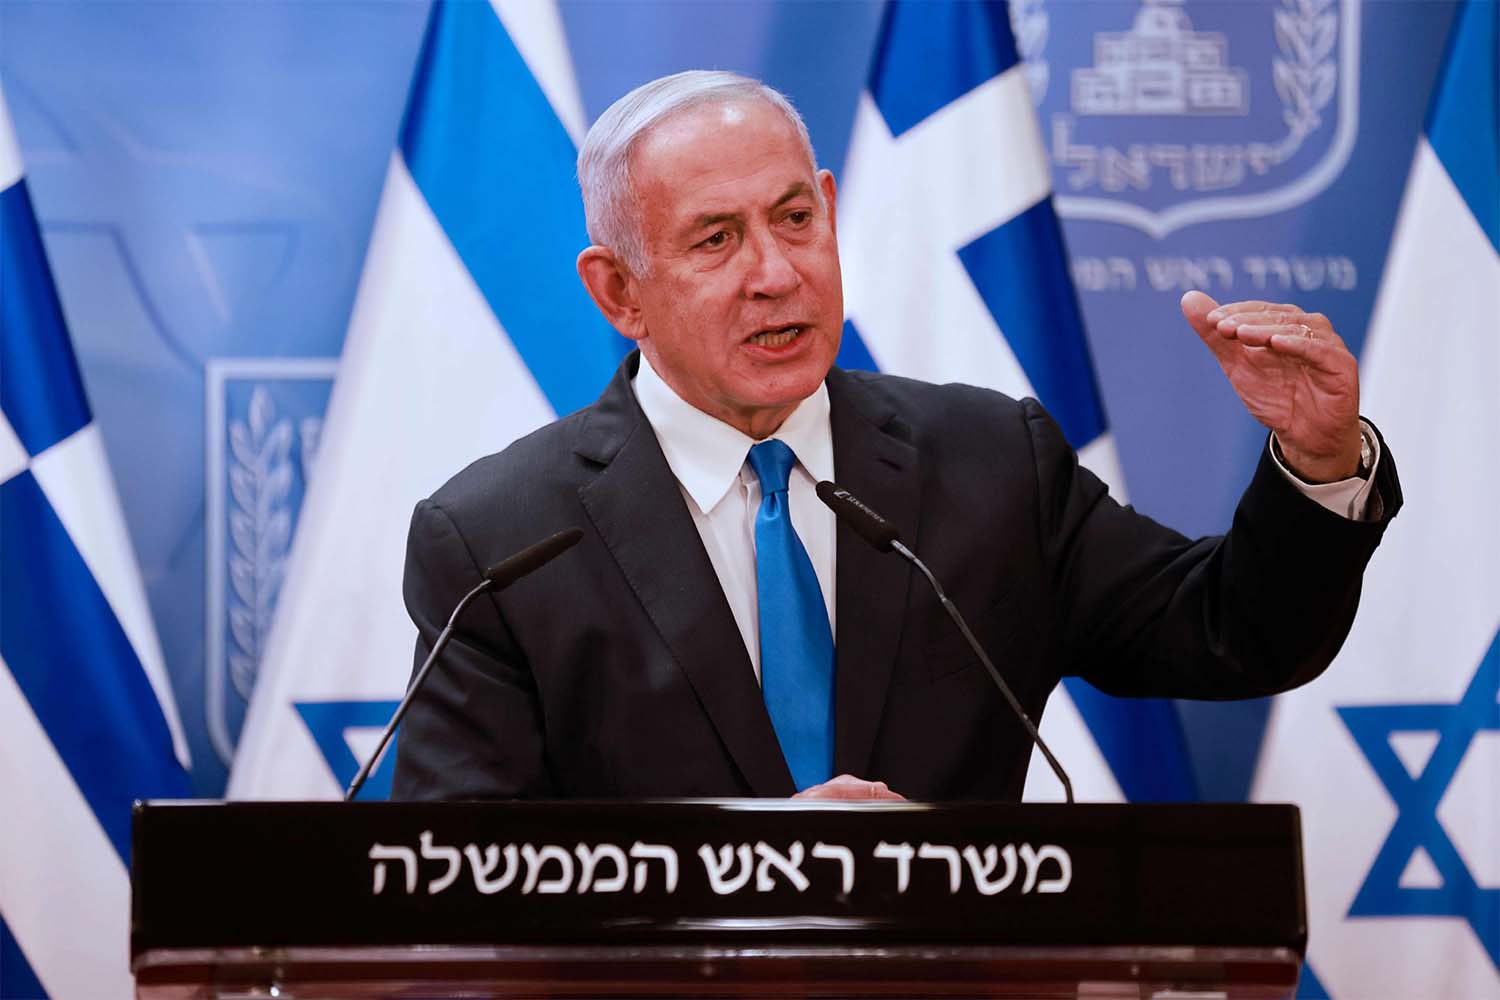 Irsaeli PM Benjamin Netanyahu